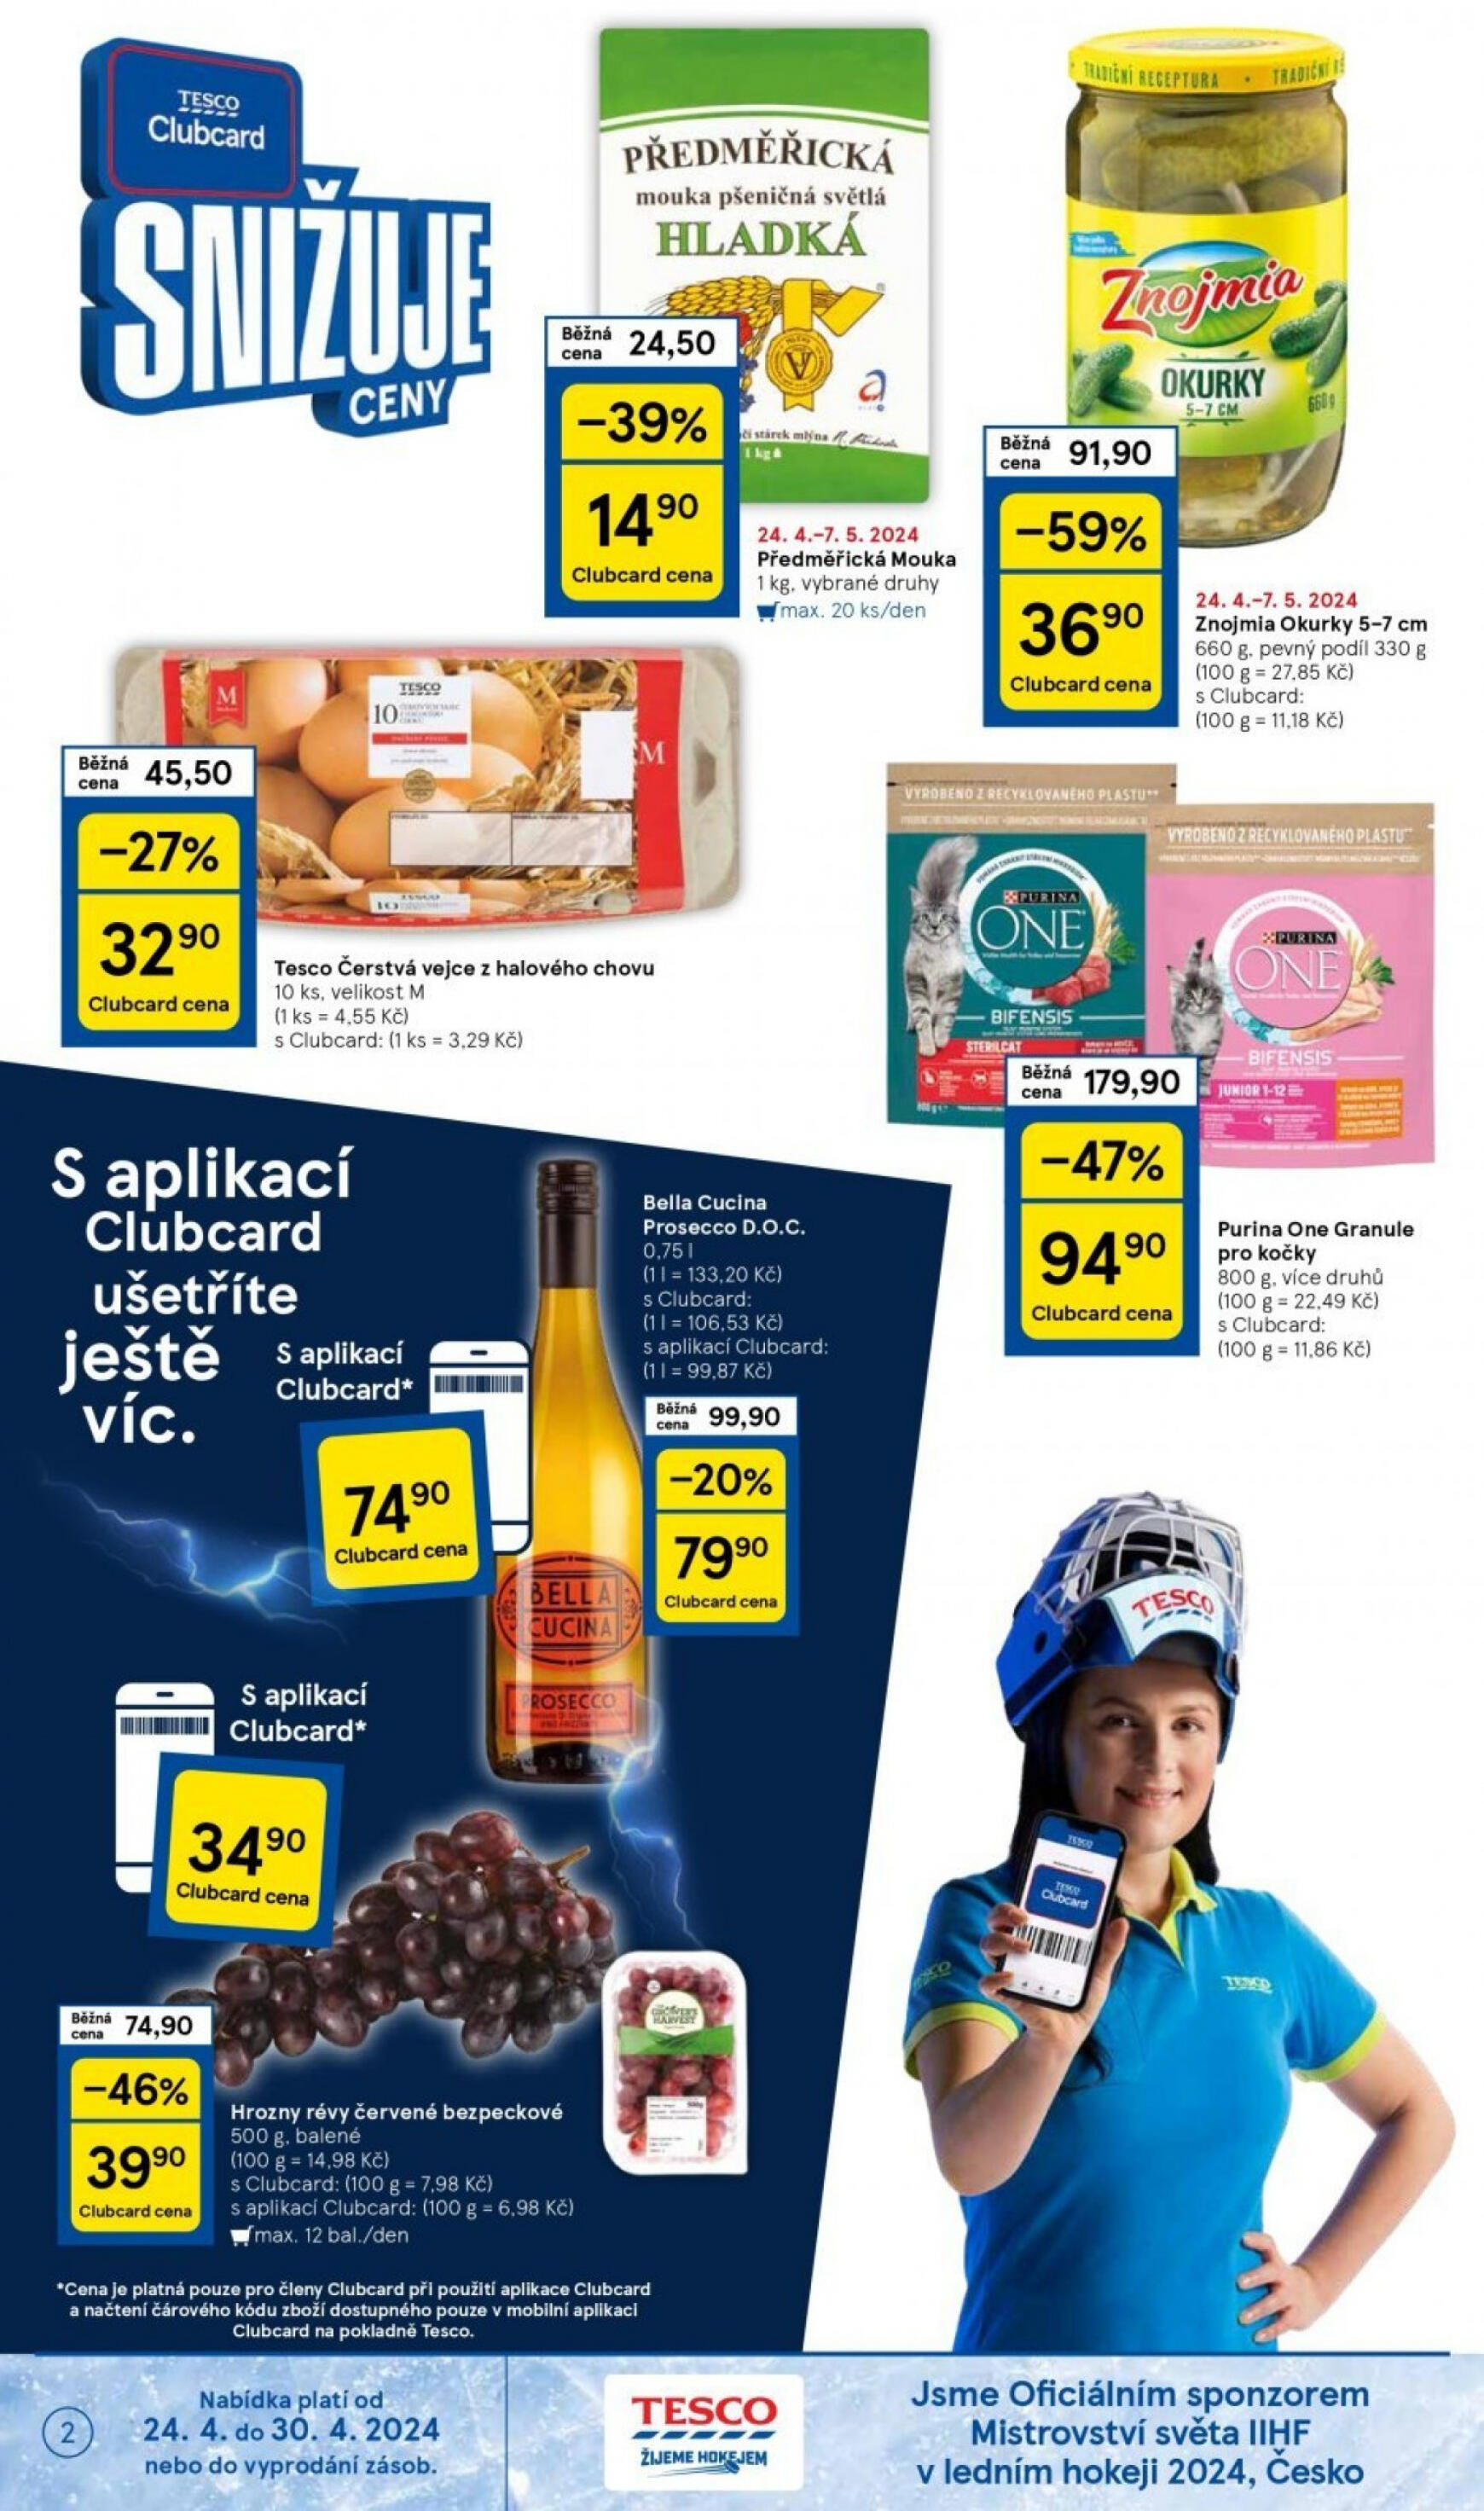 tesco - Leták Tesco supermarket aktuální 24.04. - 30.04. - page: 2